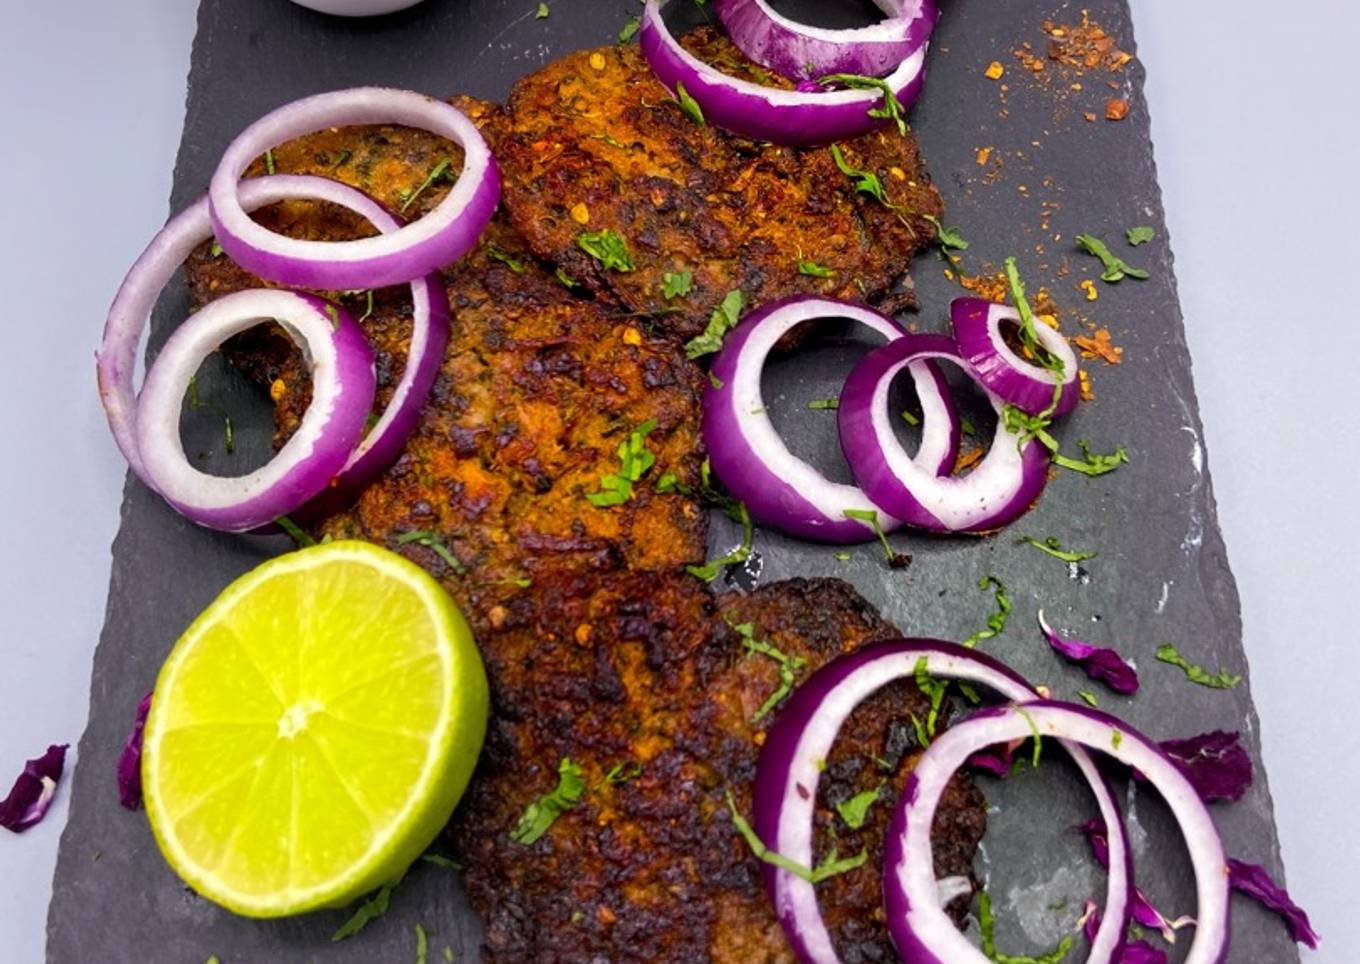 Chicken Chapli kebab
#mycookbook